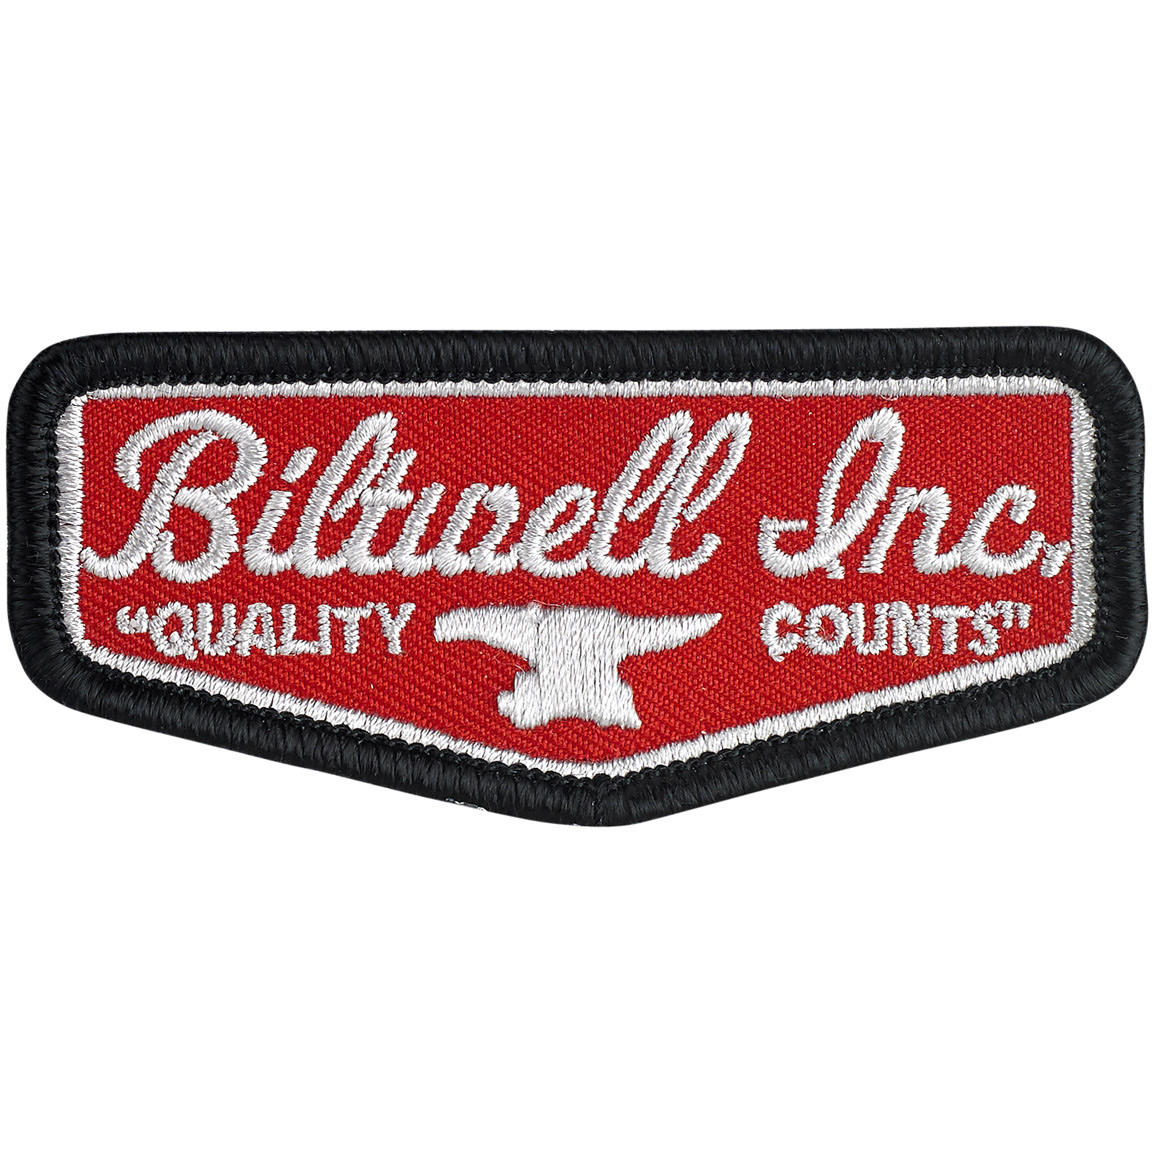 Biltwell Patch Shield Red